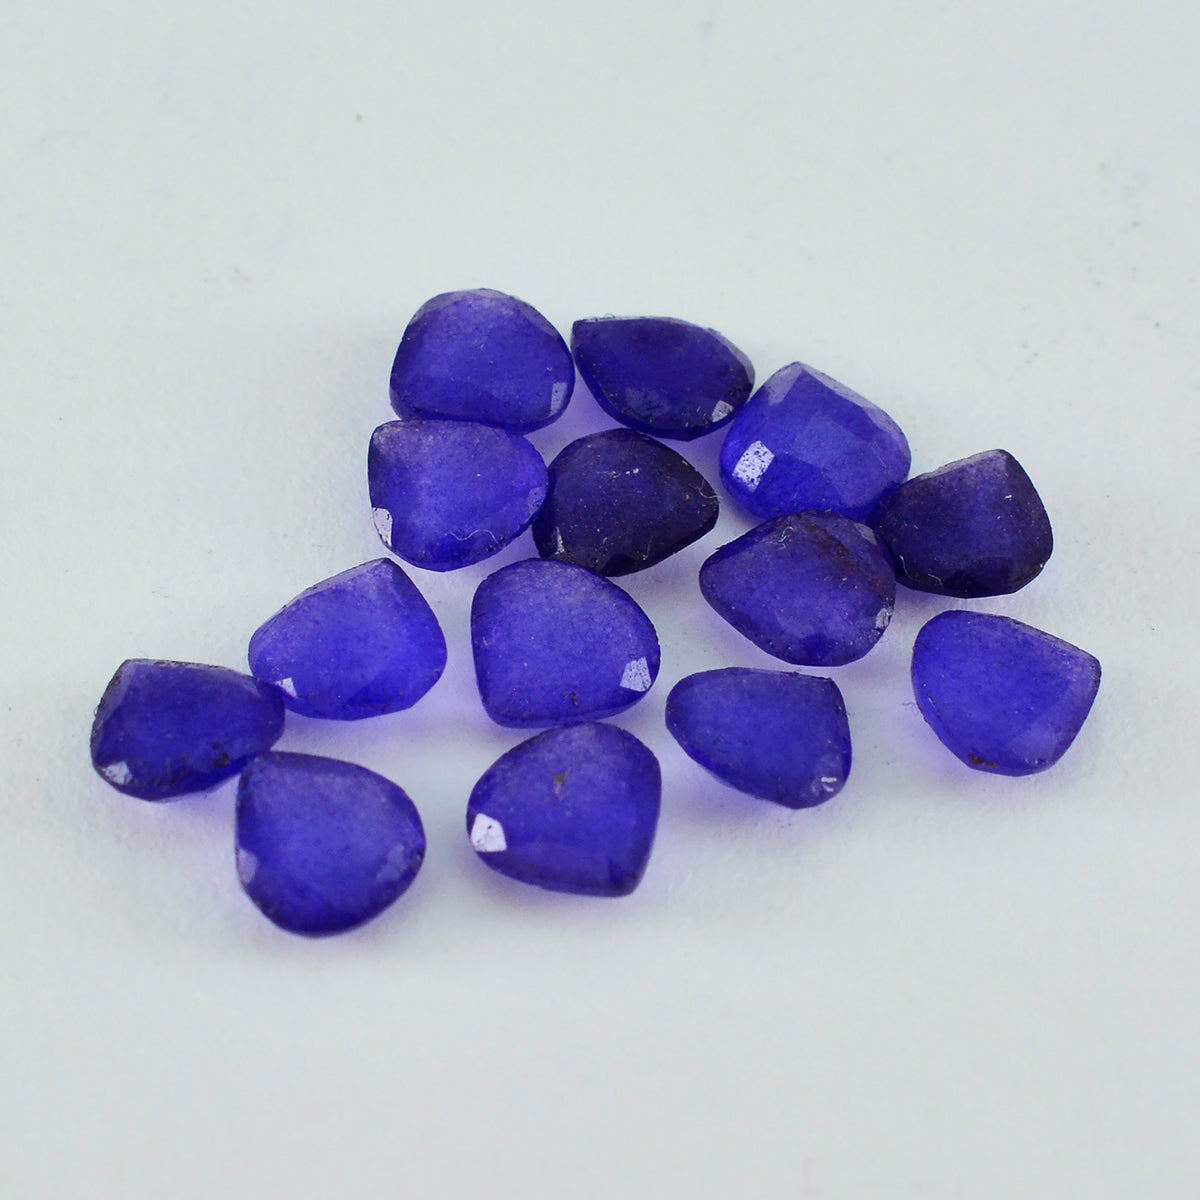 Riyogems 1PC Real Blue Jasper Faceted 7x7 mm Heart Shape fantastic Quality Loose Gemstone